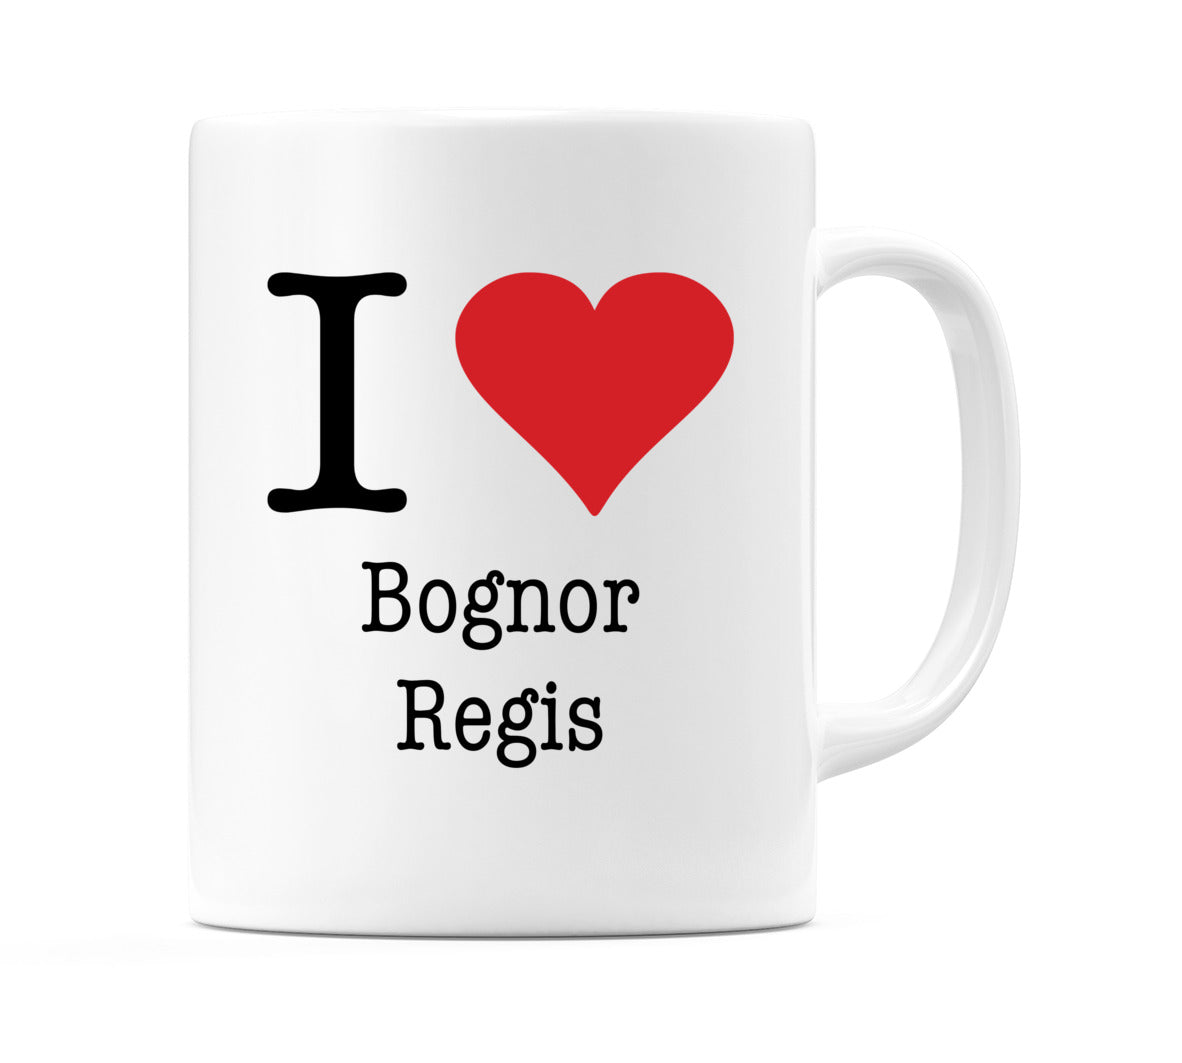 I Love Bognor Regis Mug